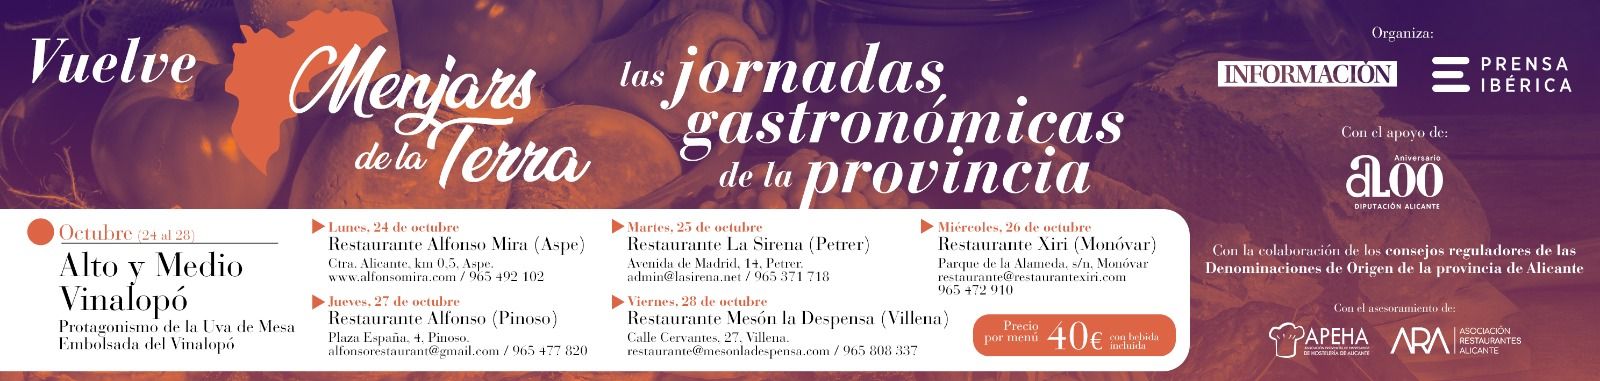 El restaurante Alfonso Mira de Aspe acoge el acto inaugural de «Menjars de la Terra»